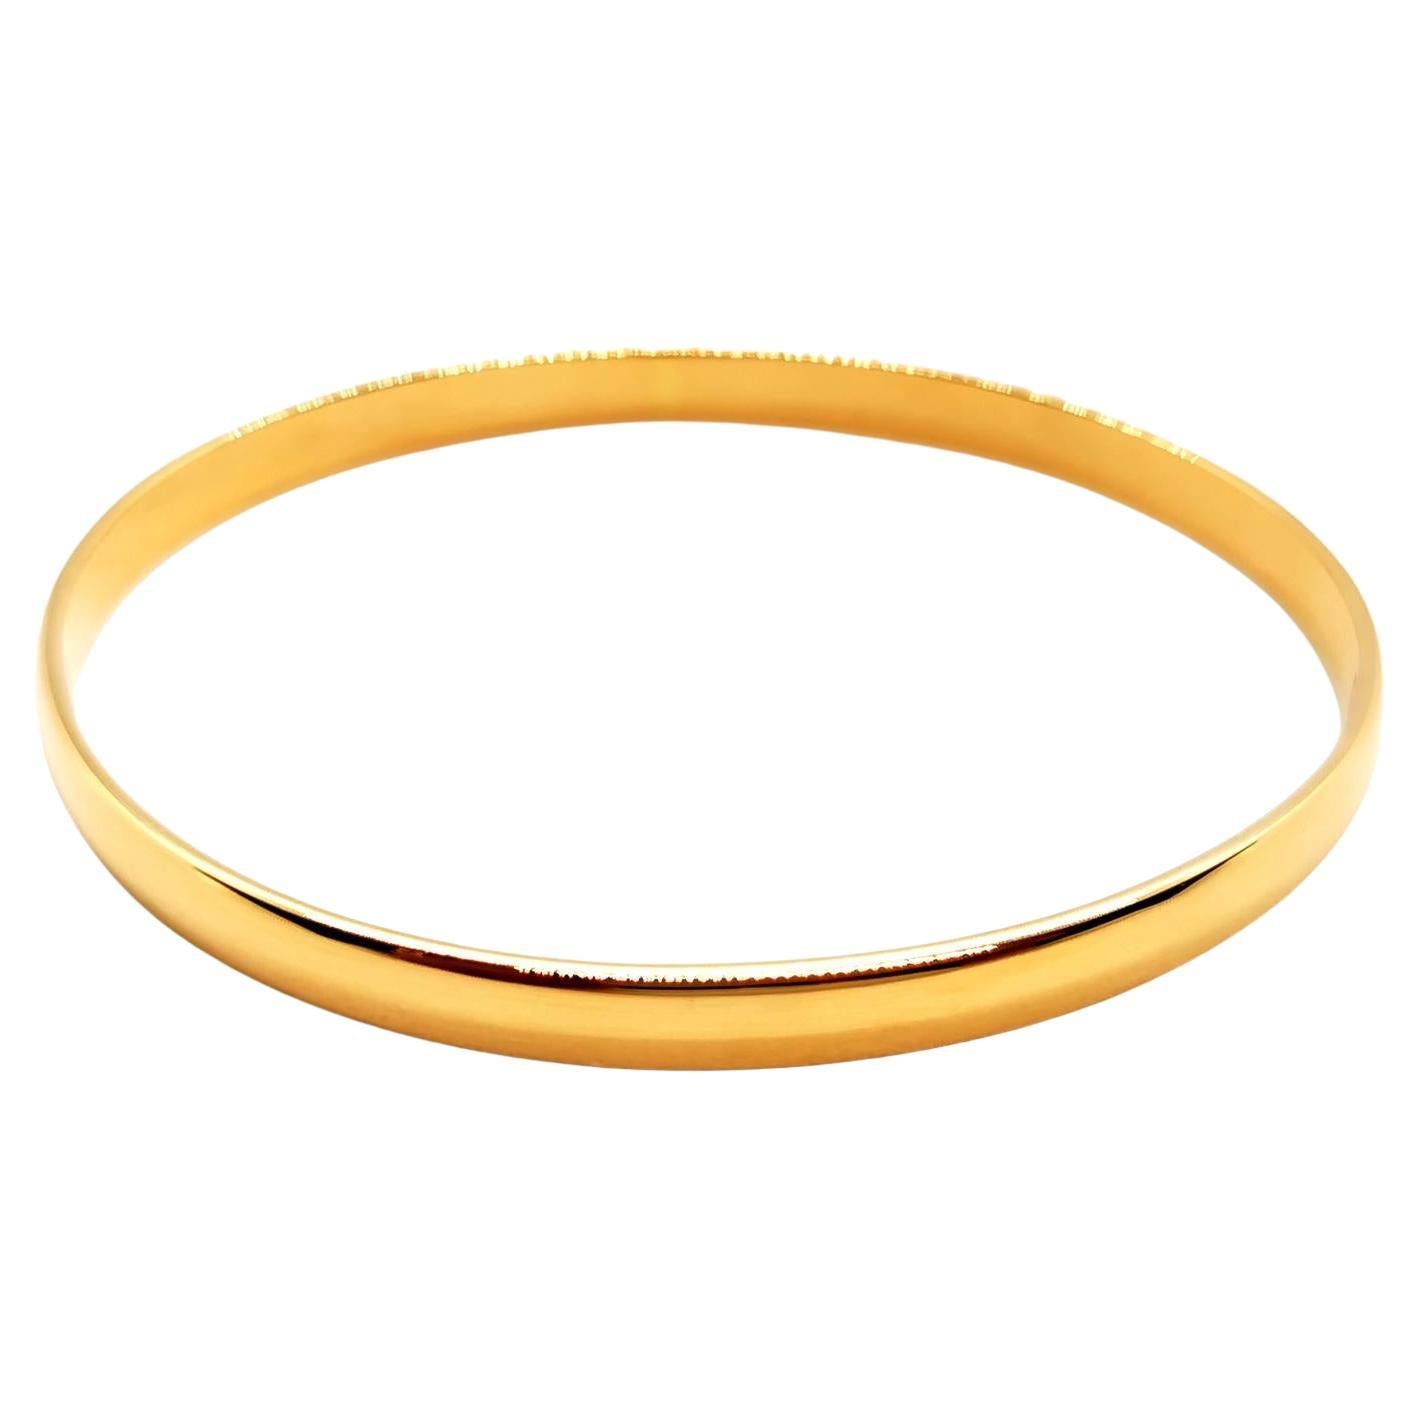 Bracelet en or jaune